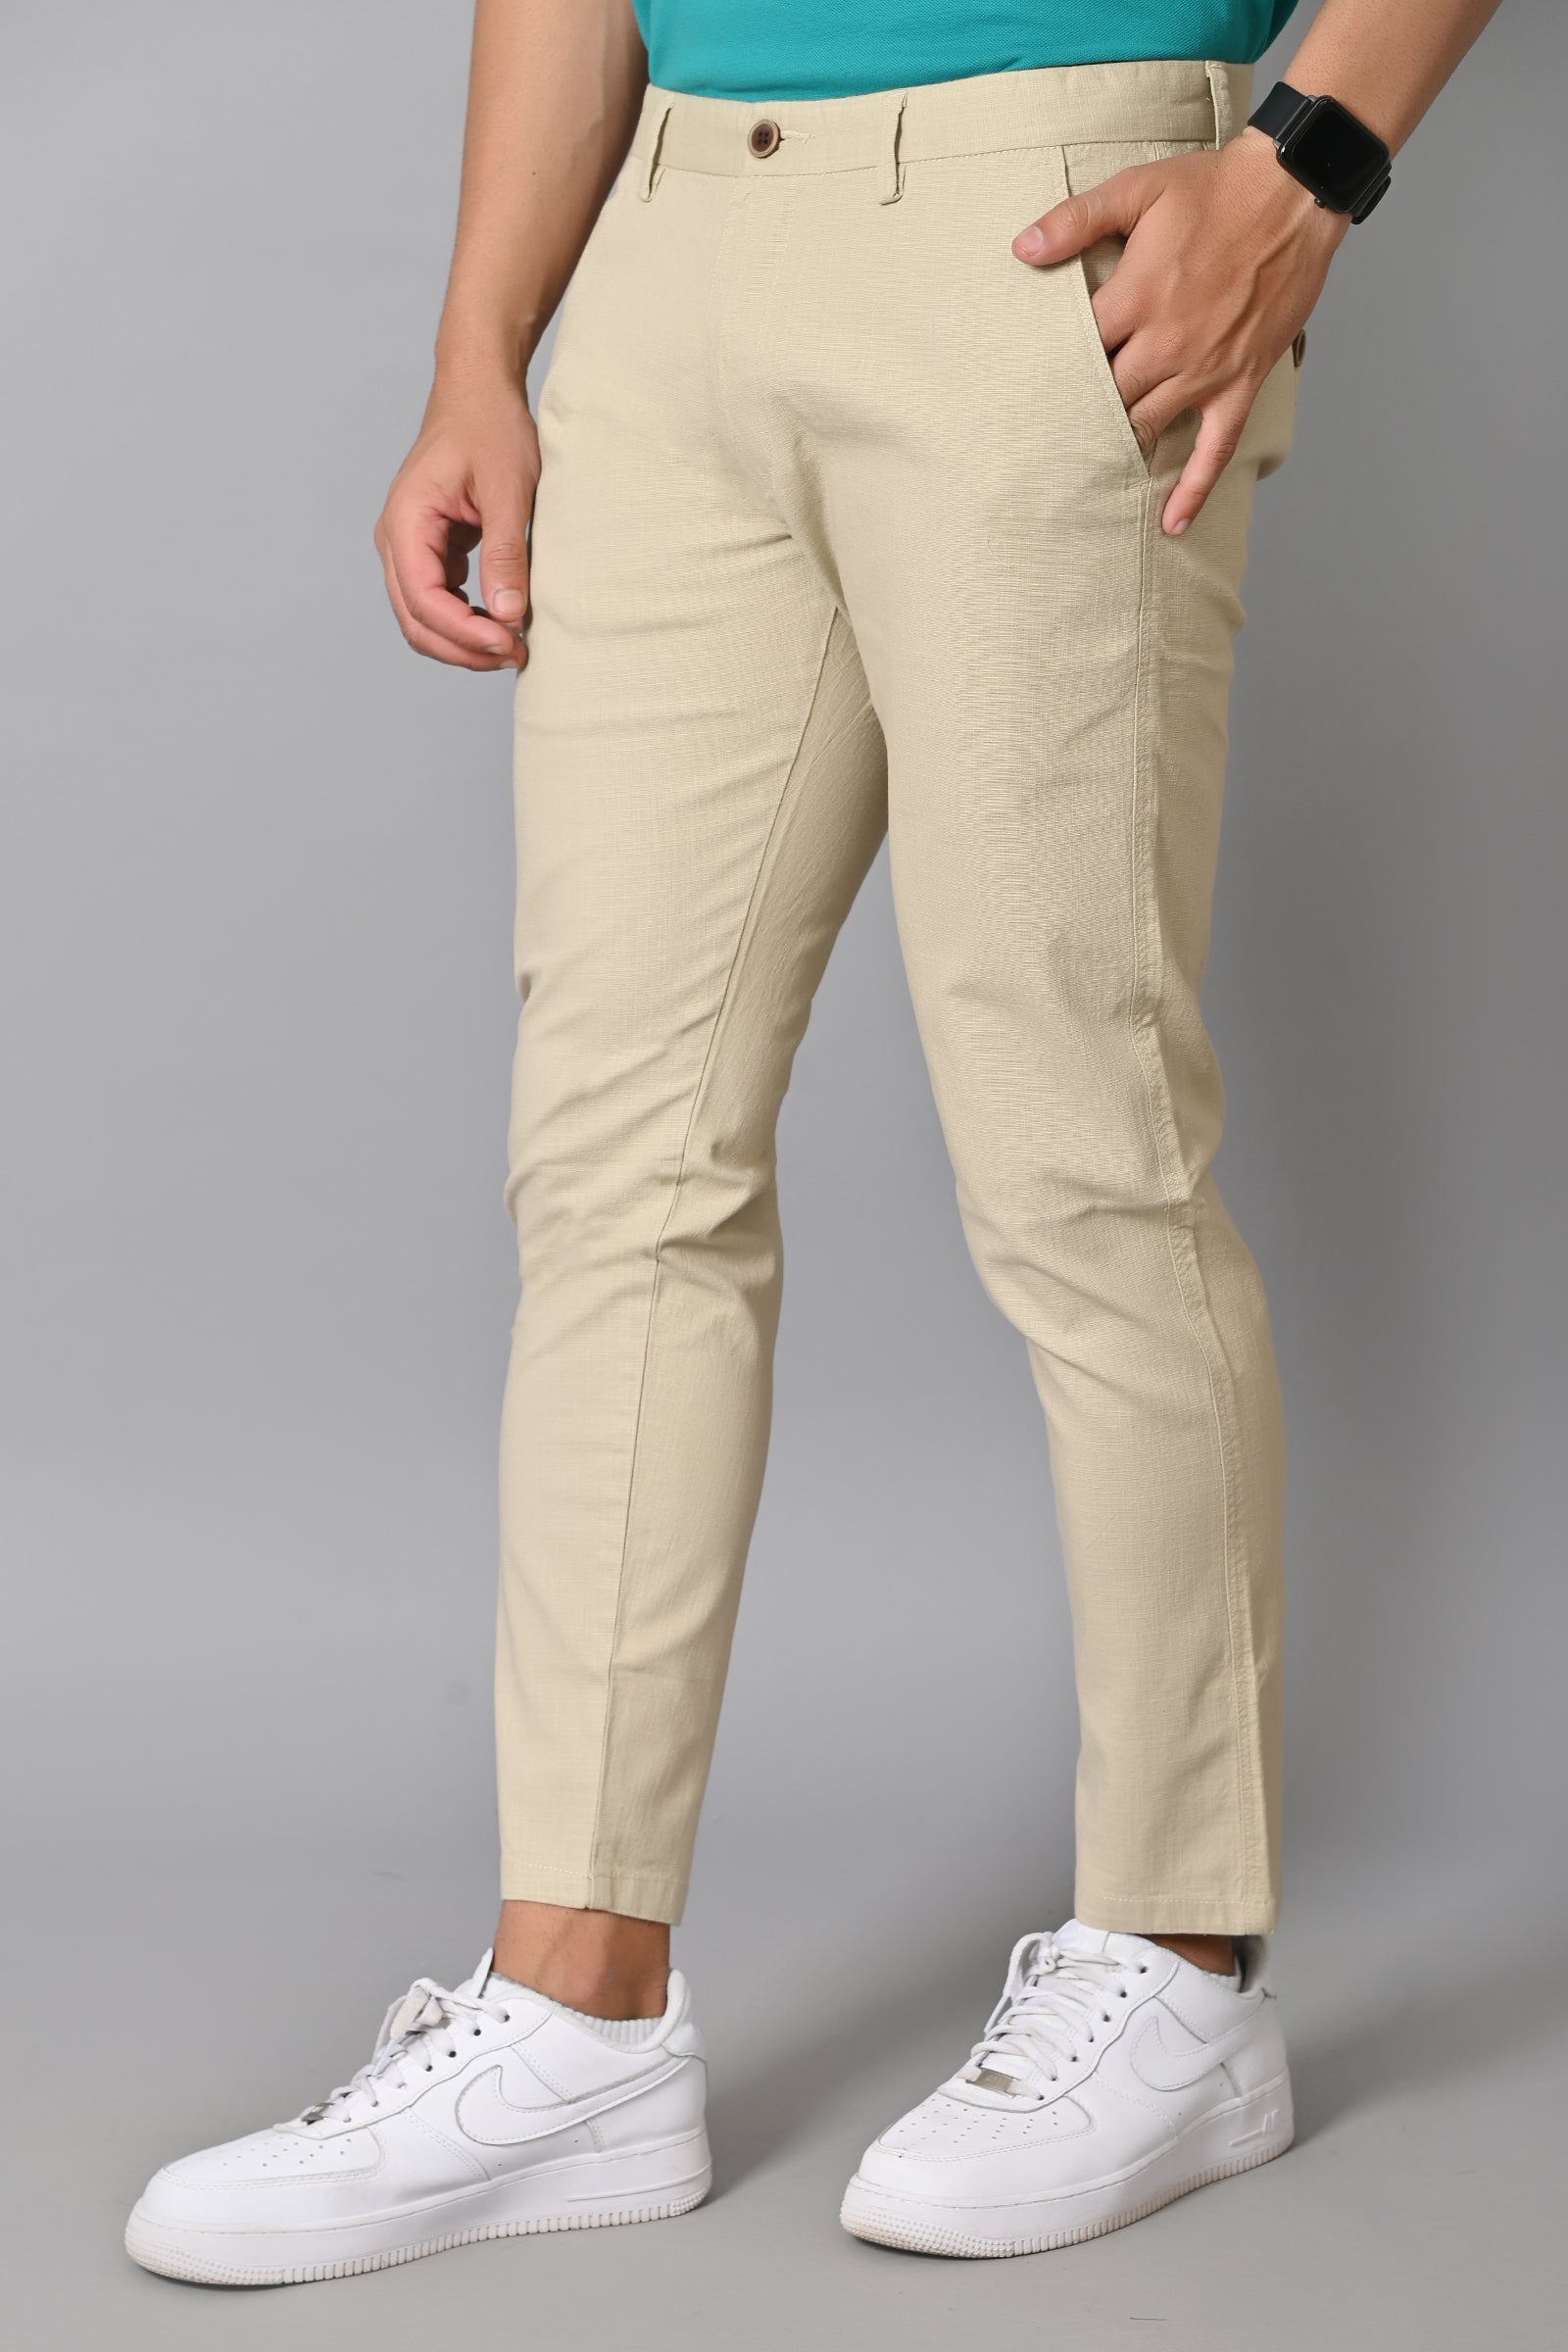 Jaguro Men's Bottomwear Trouser Chinos Light Grey